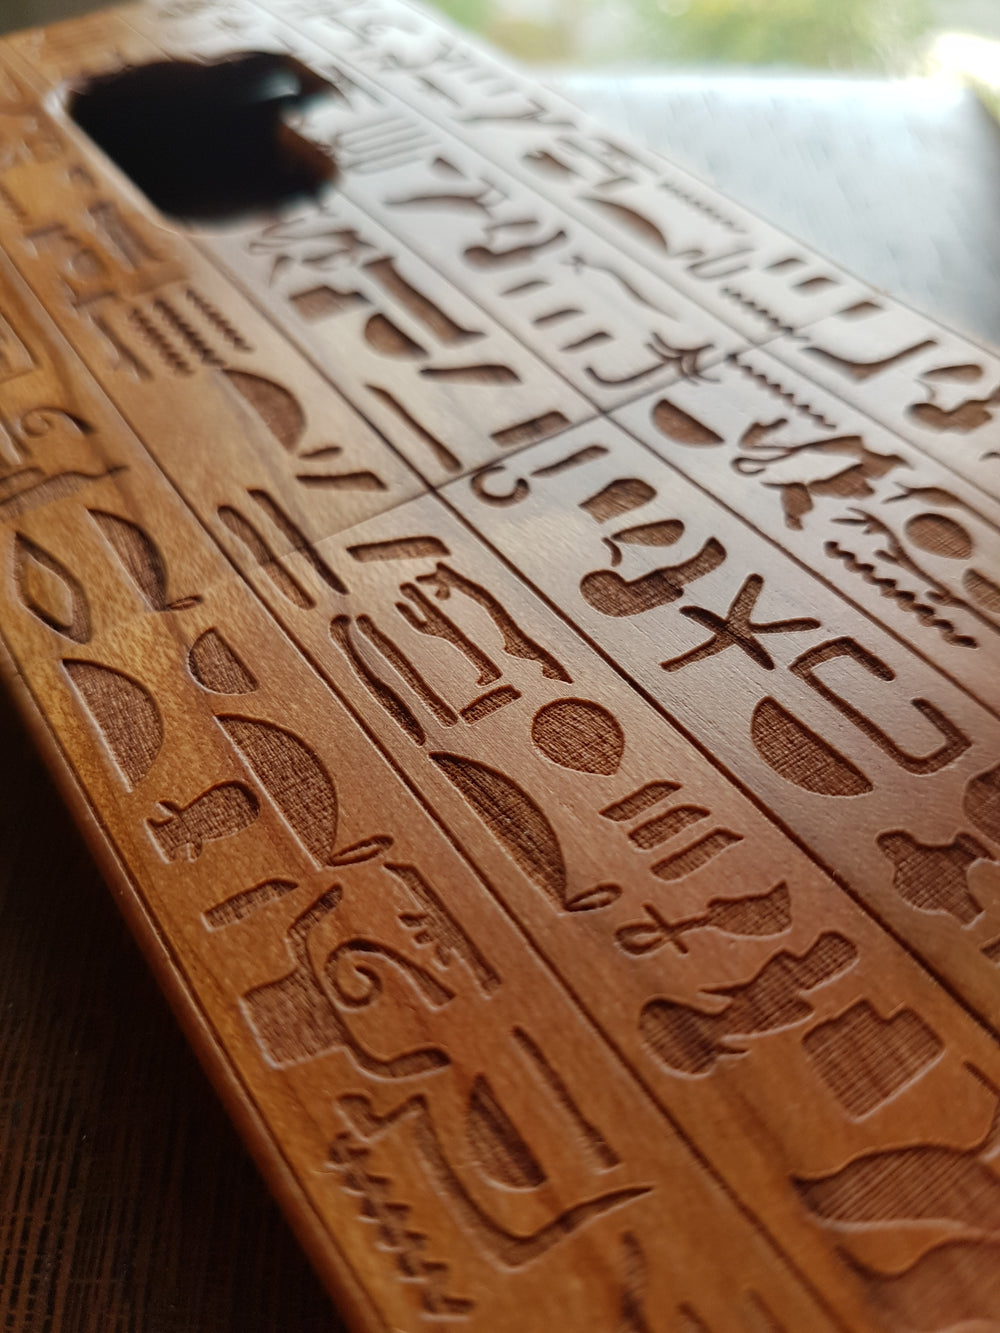 HIEROGLYPHS Wood Phone Case Ancient Symbols